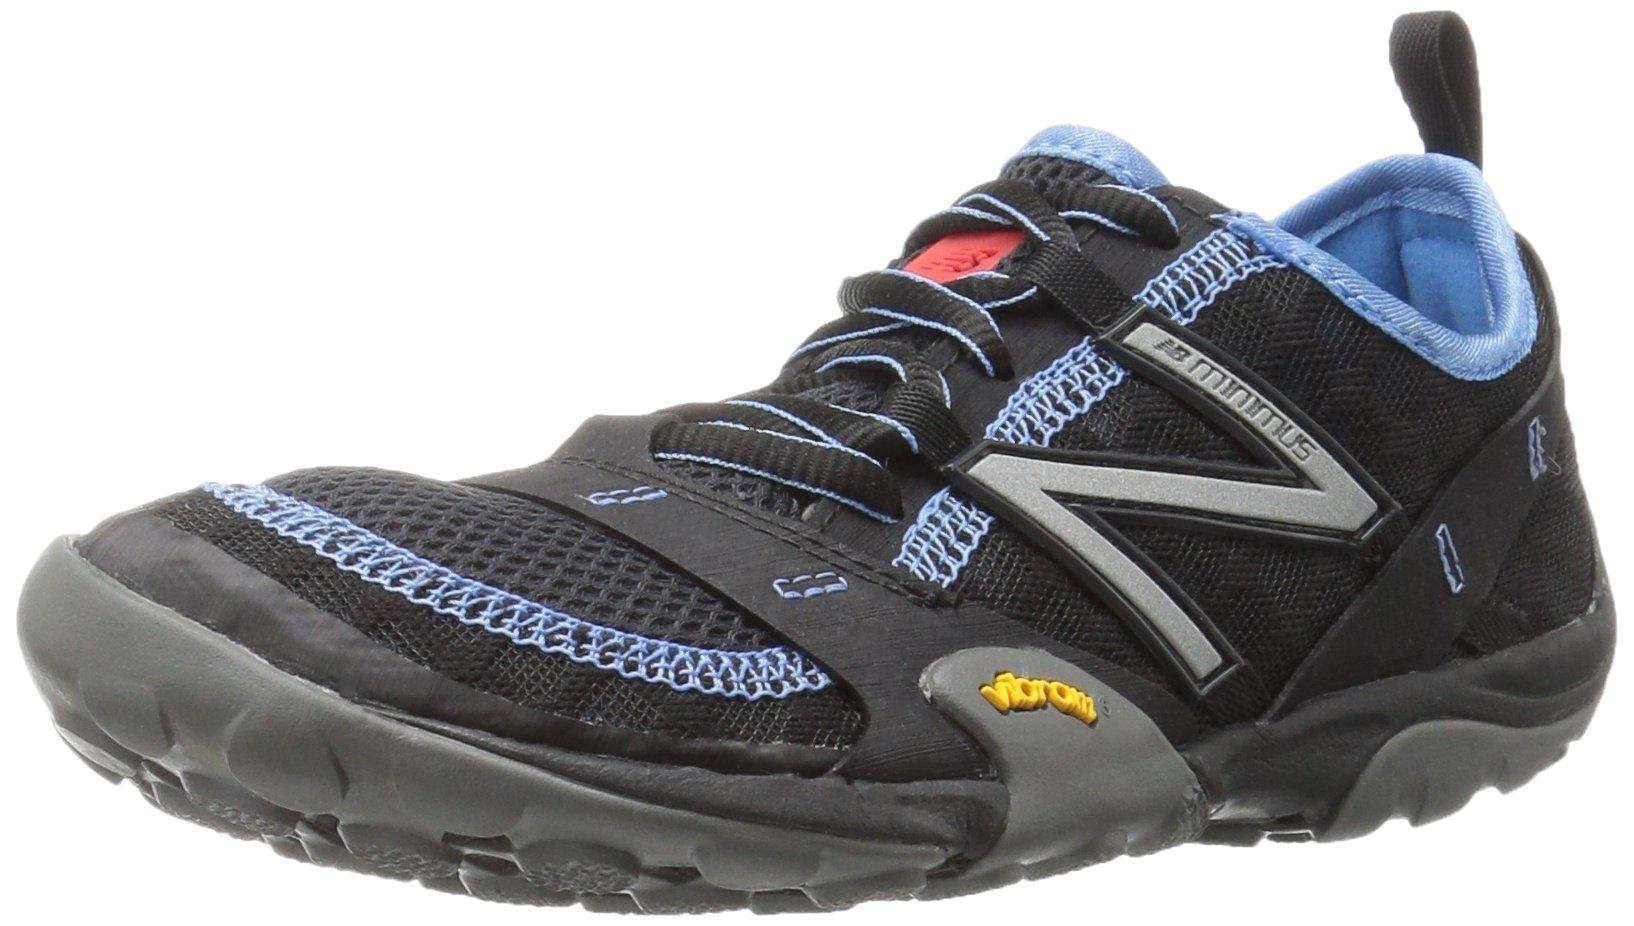 New Balance S Minimus Wt10v1 Trail Running Shoes in Black/Blue (Black) -  Save 44% | Lyst